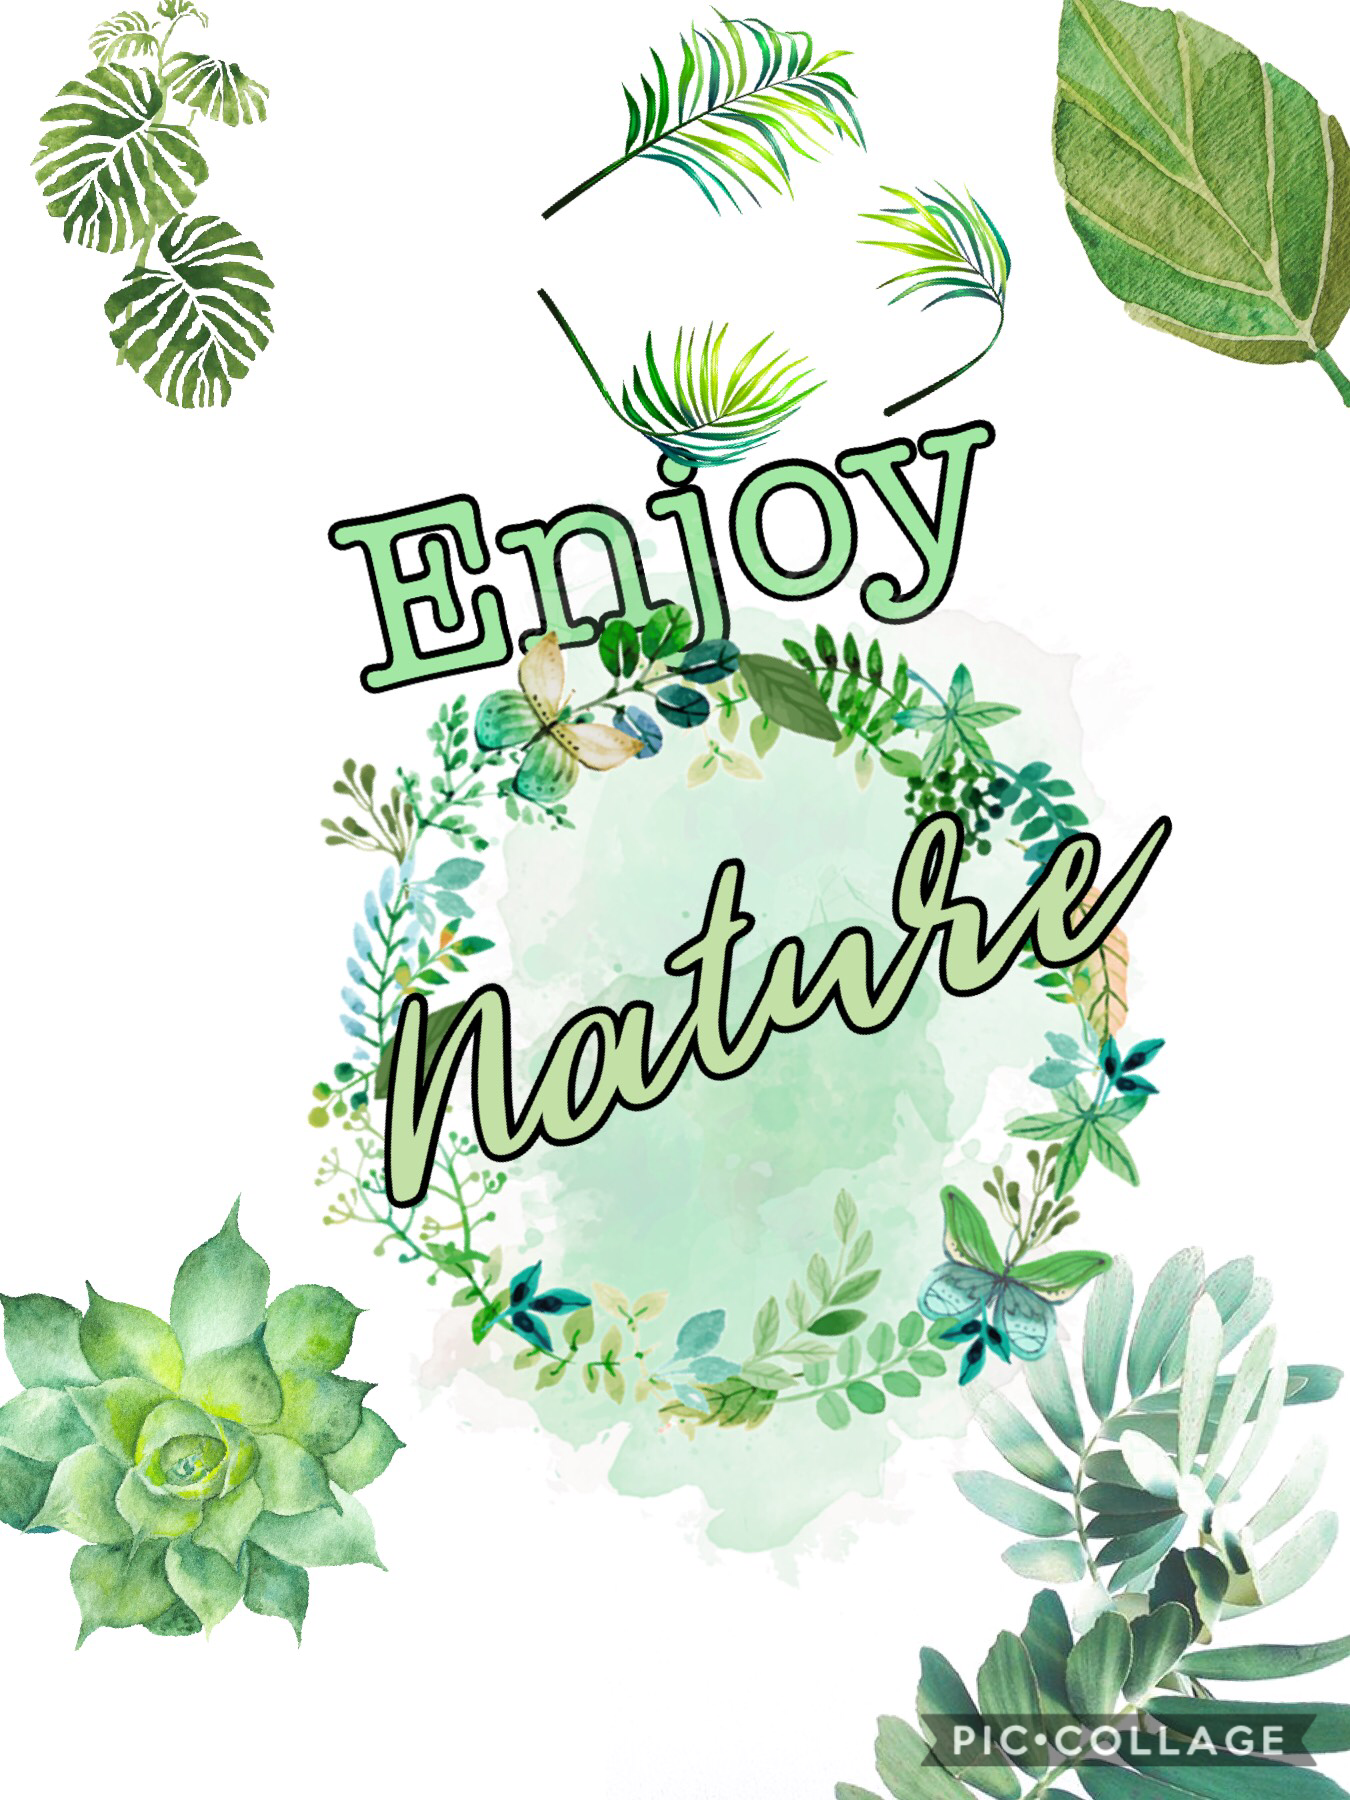 Enjoy nature!